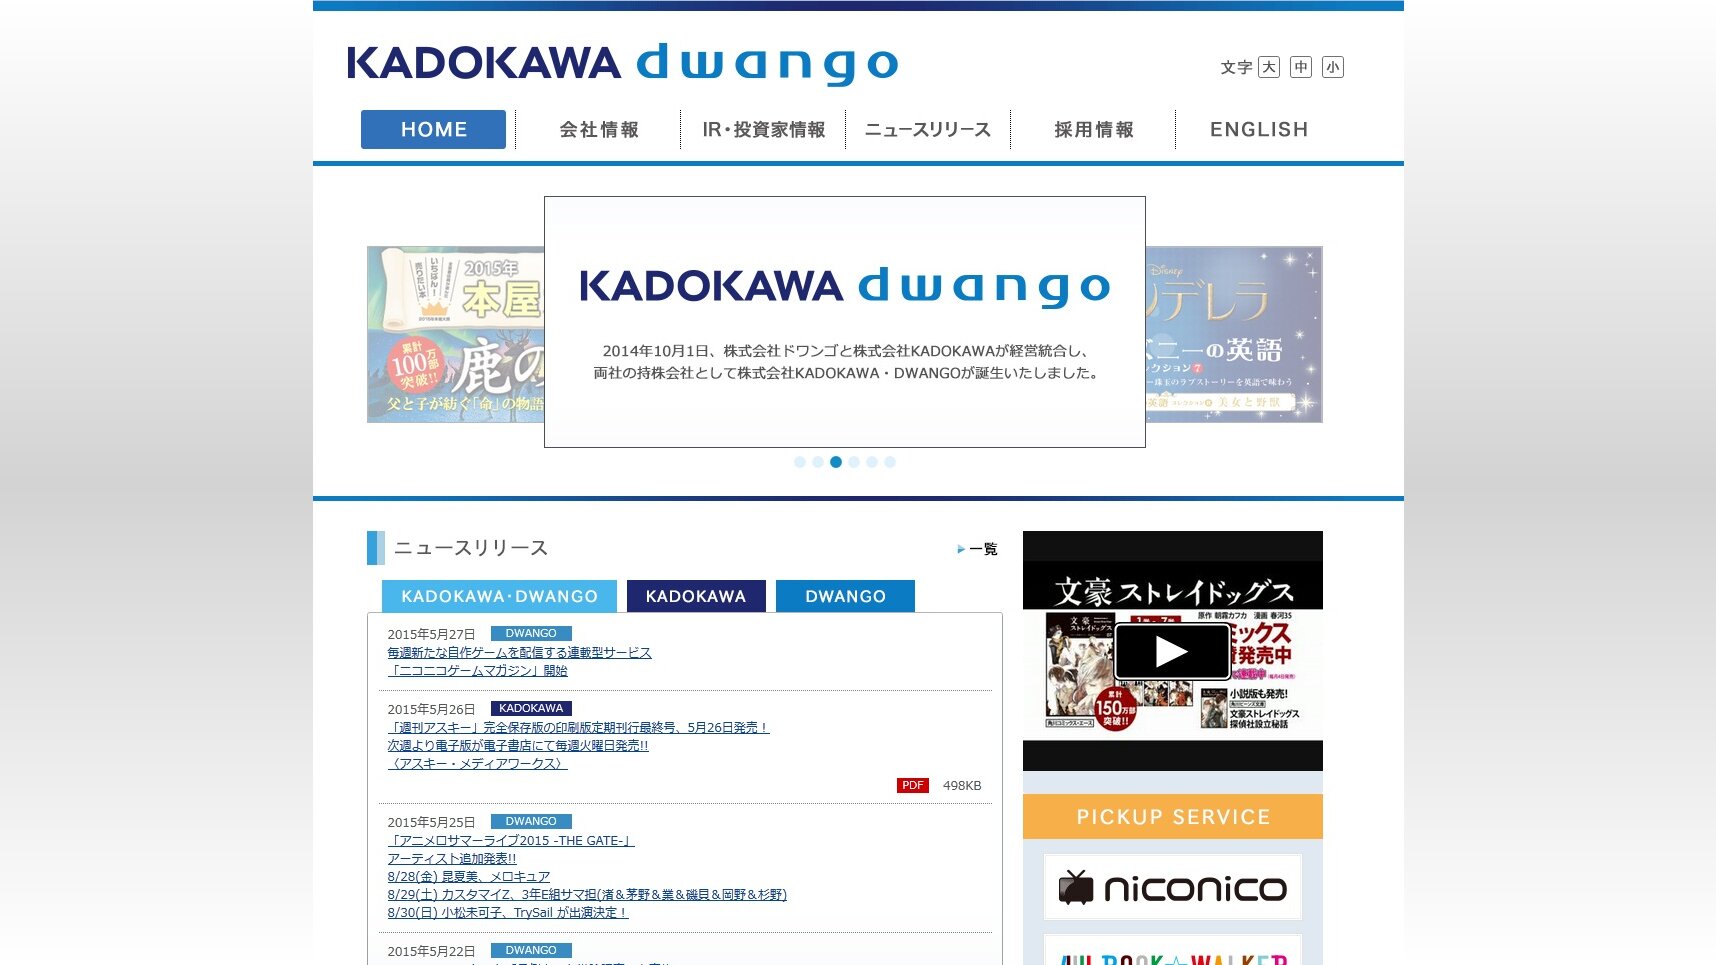 Kadokawa Dwangoがカドカワに社名変更 両社から2音ずつ取った結果ドワンゴが消える 15年5月28日 Biglobeニュース